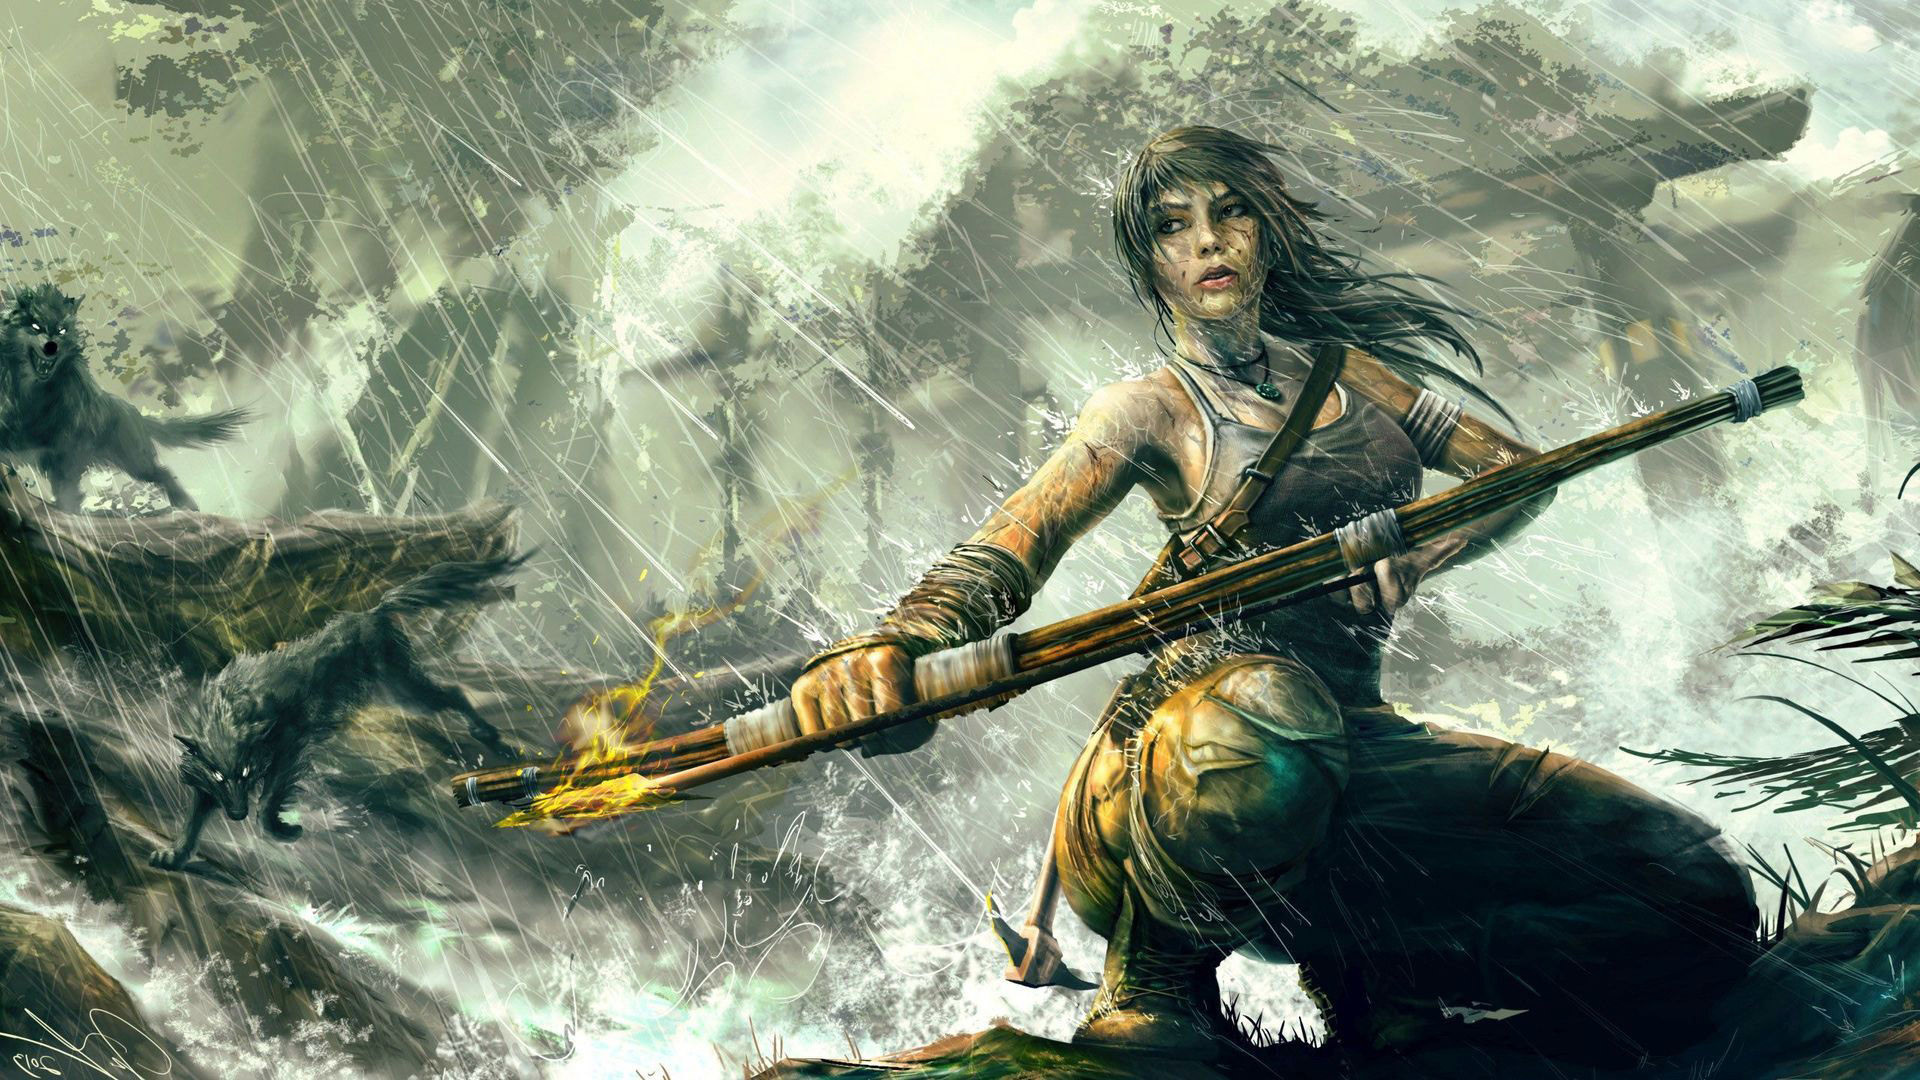 1920x1080, Wallpaper Lara Croft Arrow Fire Heavy Rain - Tomb Raider Lara Croft Campfire - HD Wallpaper 